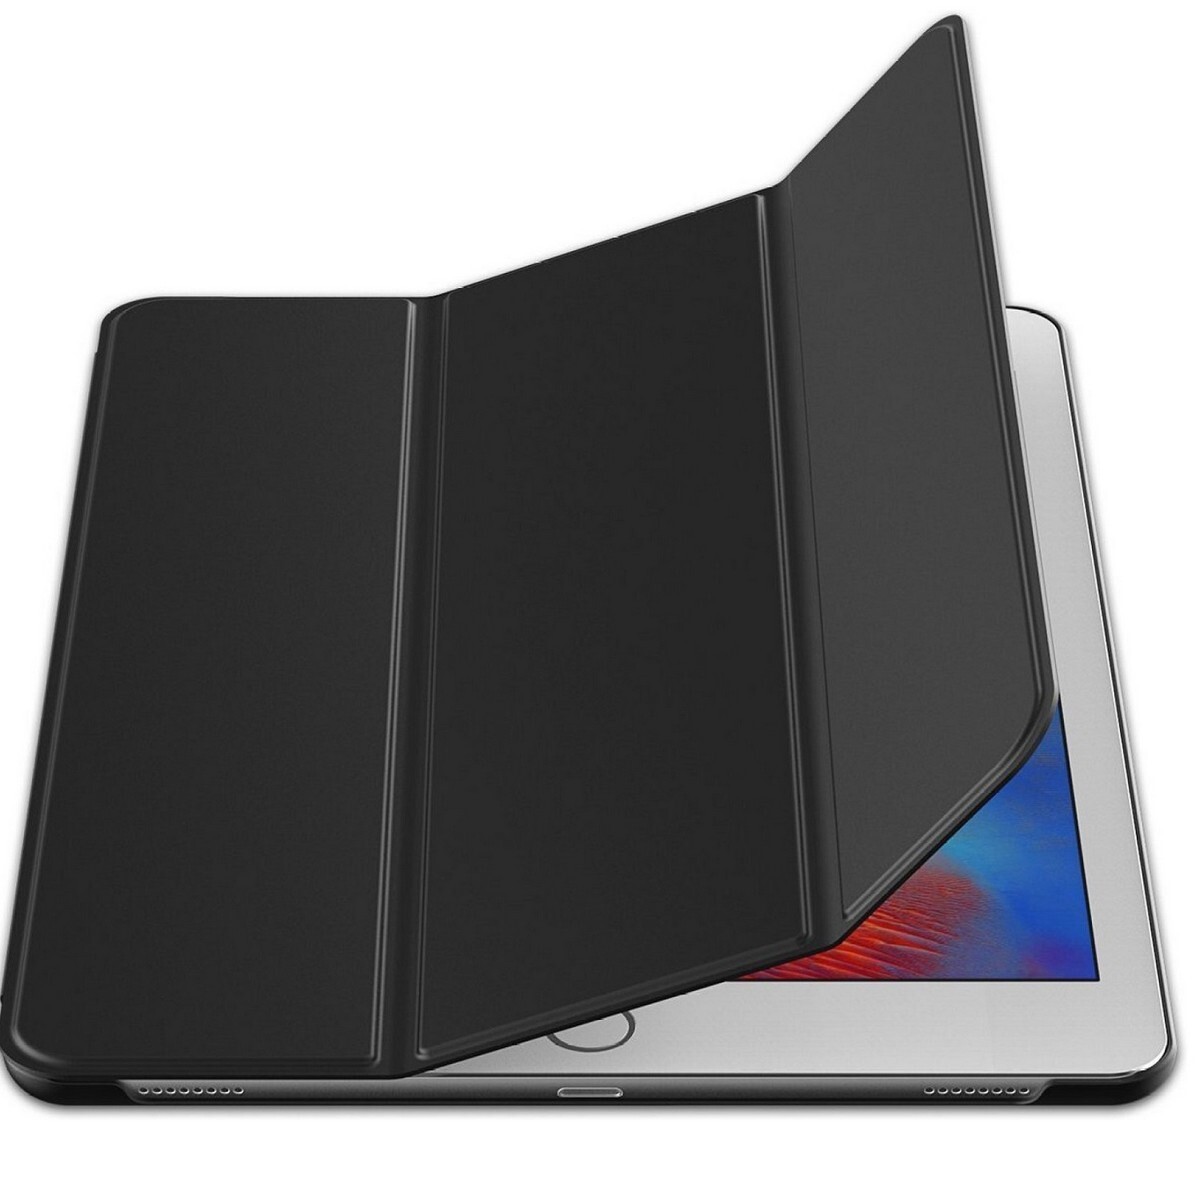 Neopack Delta Case Flip Cover for iPad 50BK97